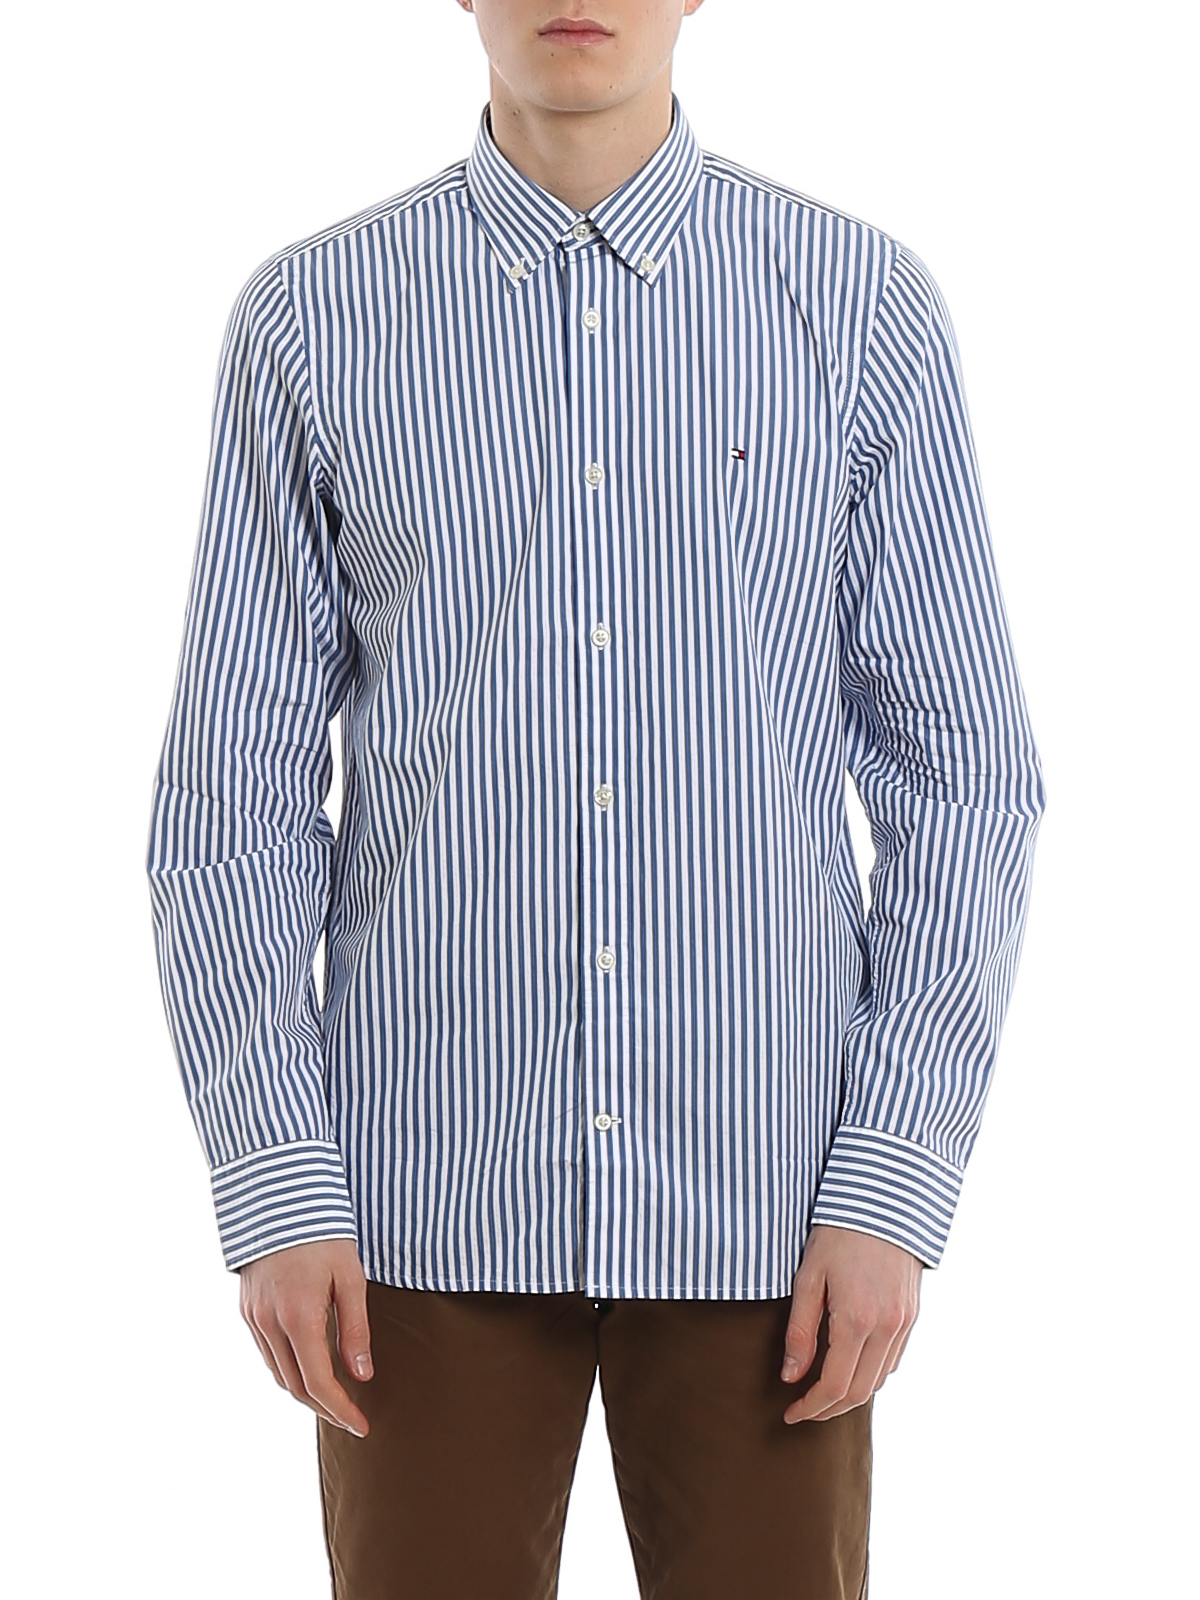 Begging Aja Inhale Shirts Tommy Hilfiger - Cotton striped shirt - MW0MW122090A4 | iKRIX.com